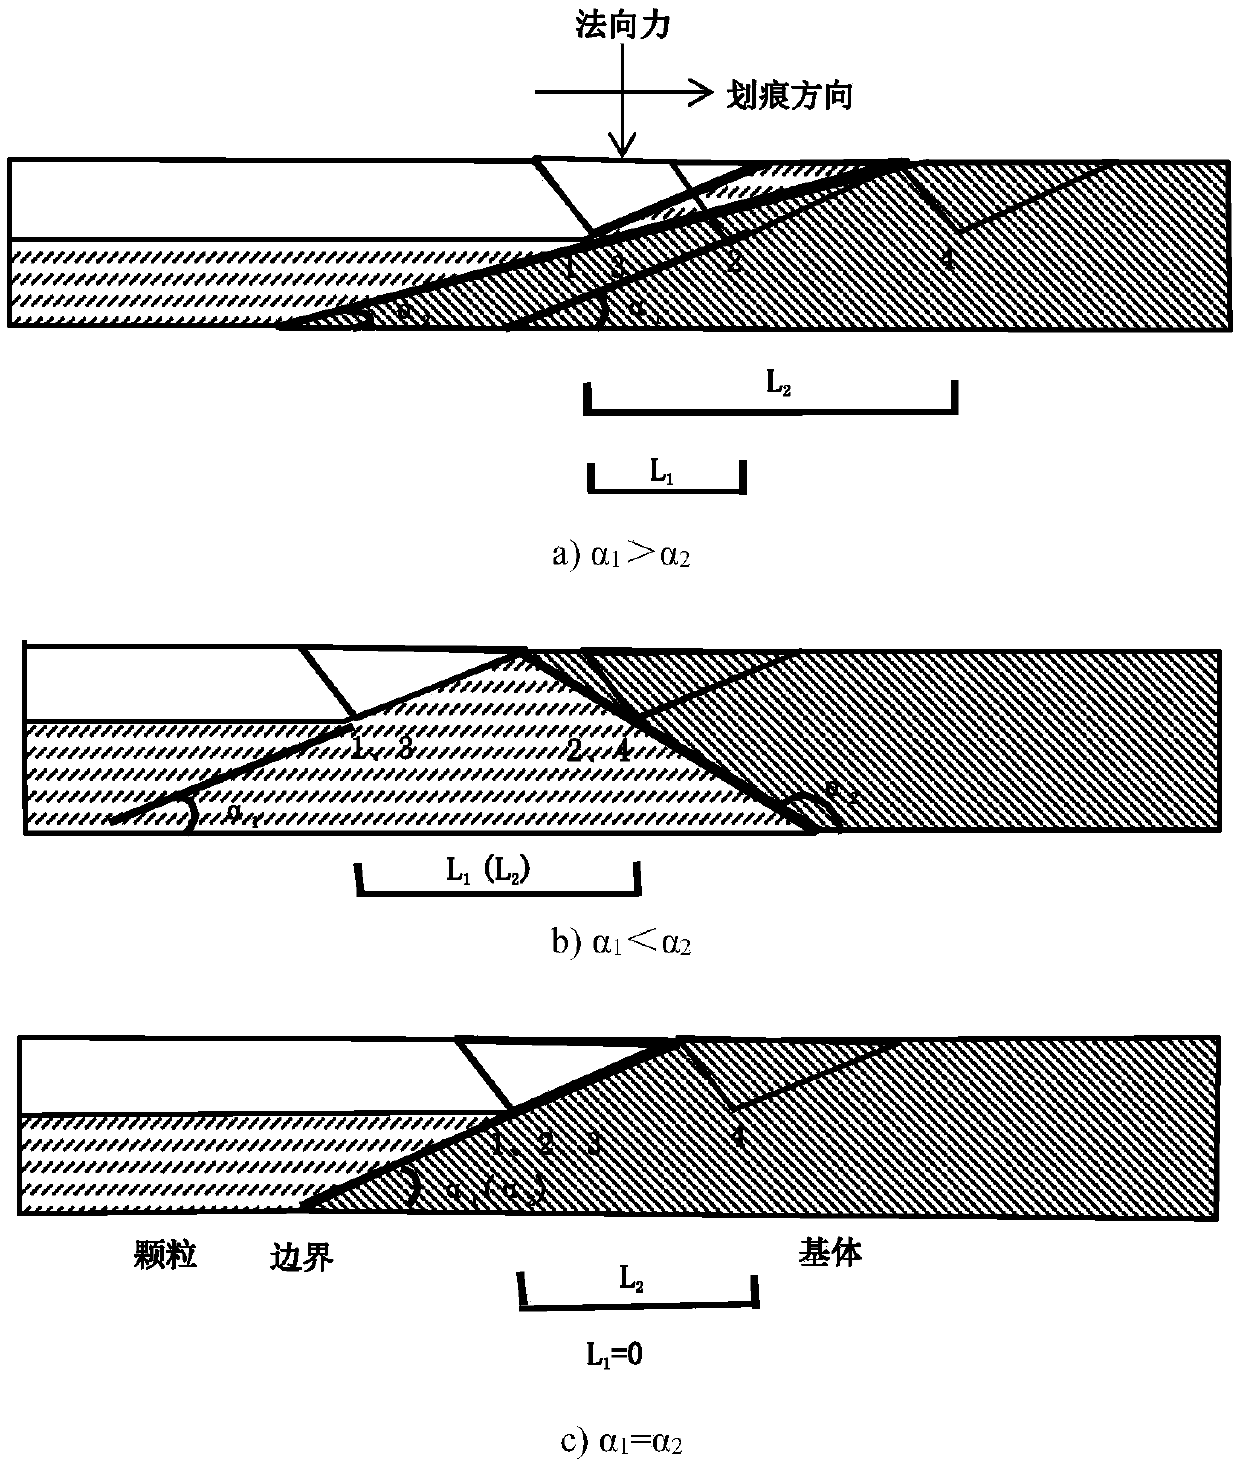 Method of judging morphology of interfacial phase of micro-nano nonuniform material